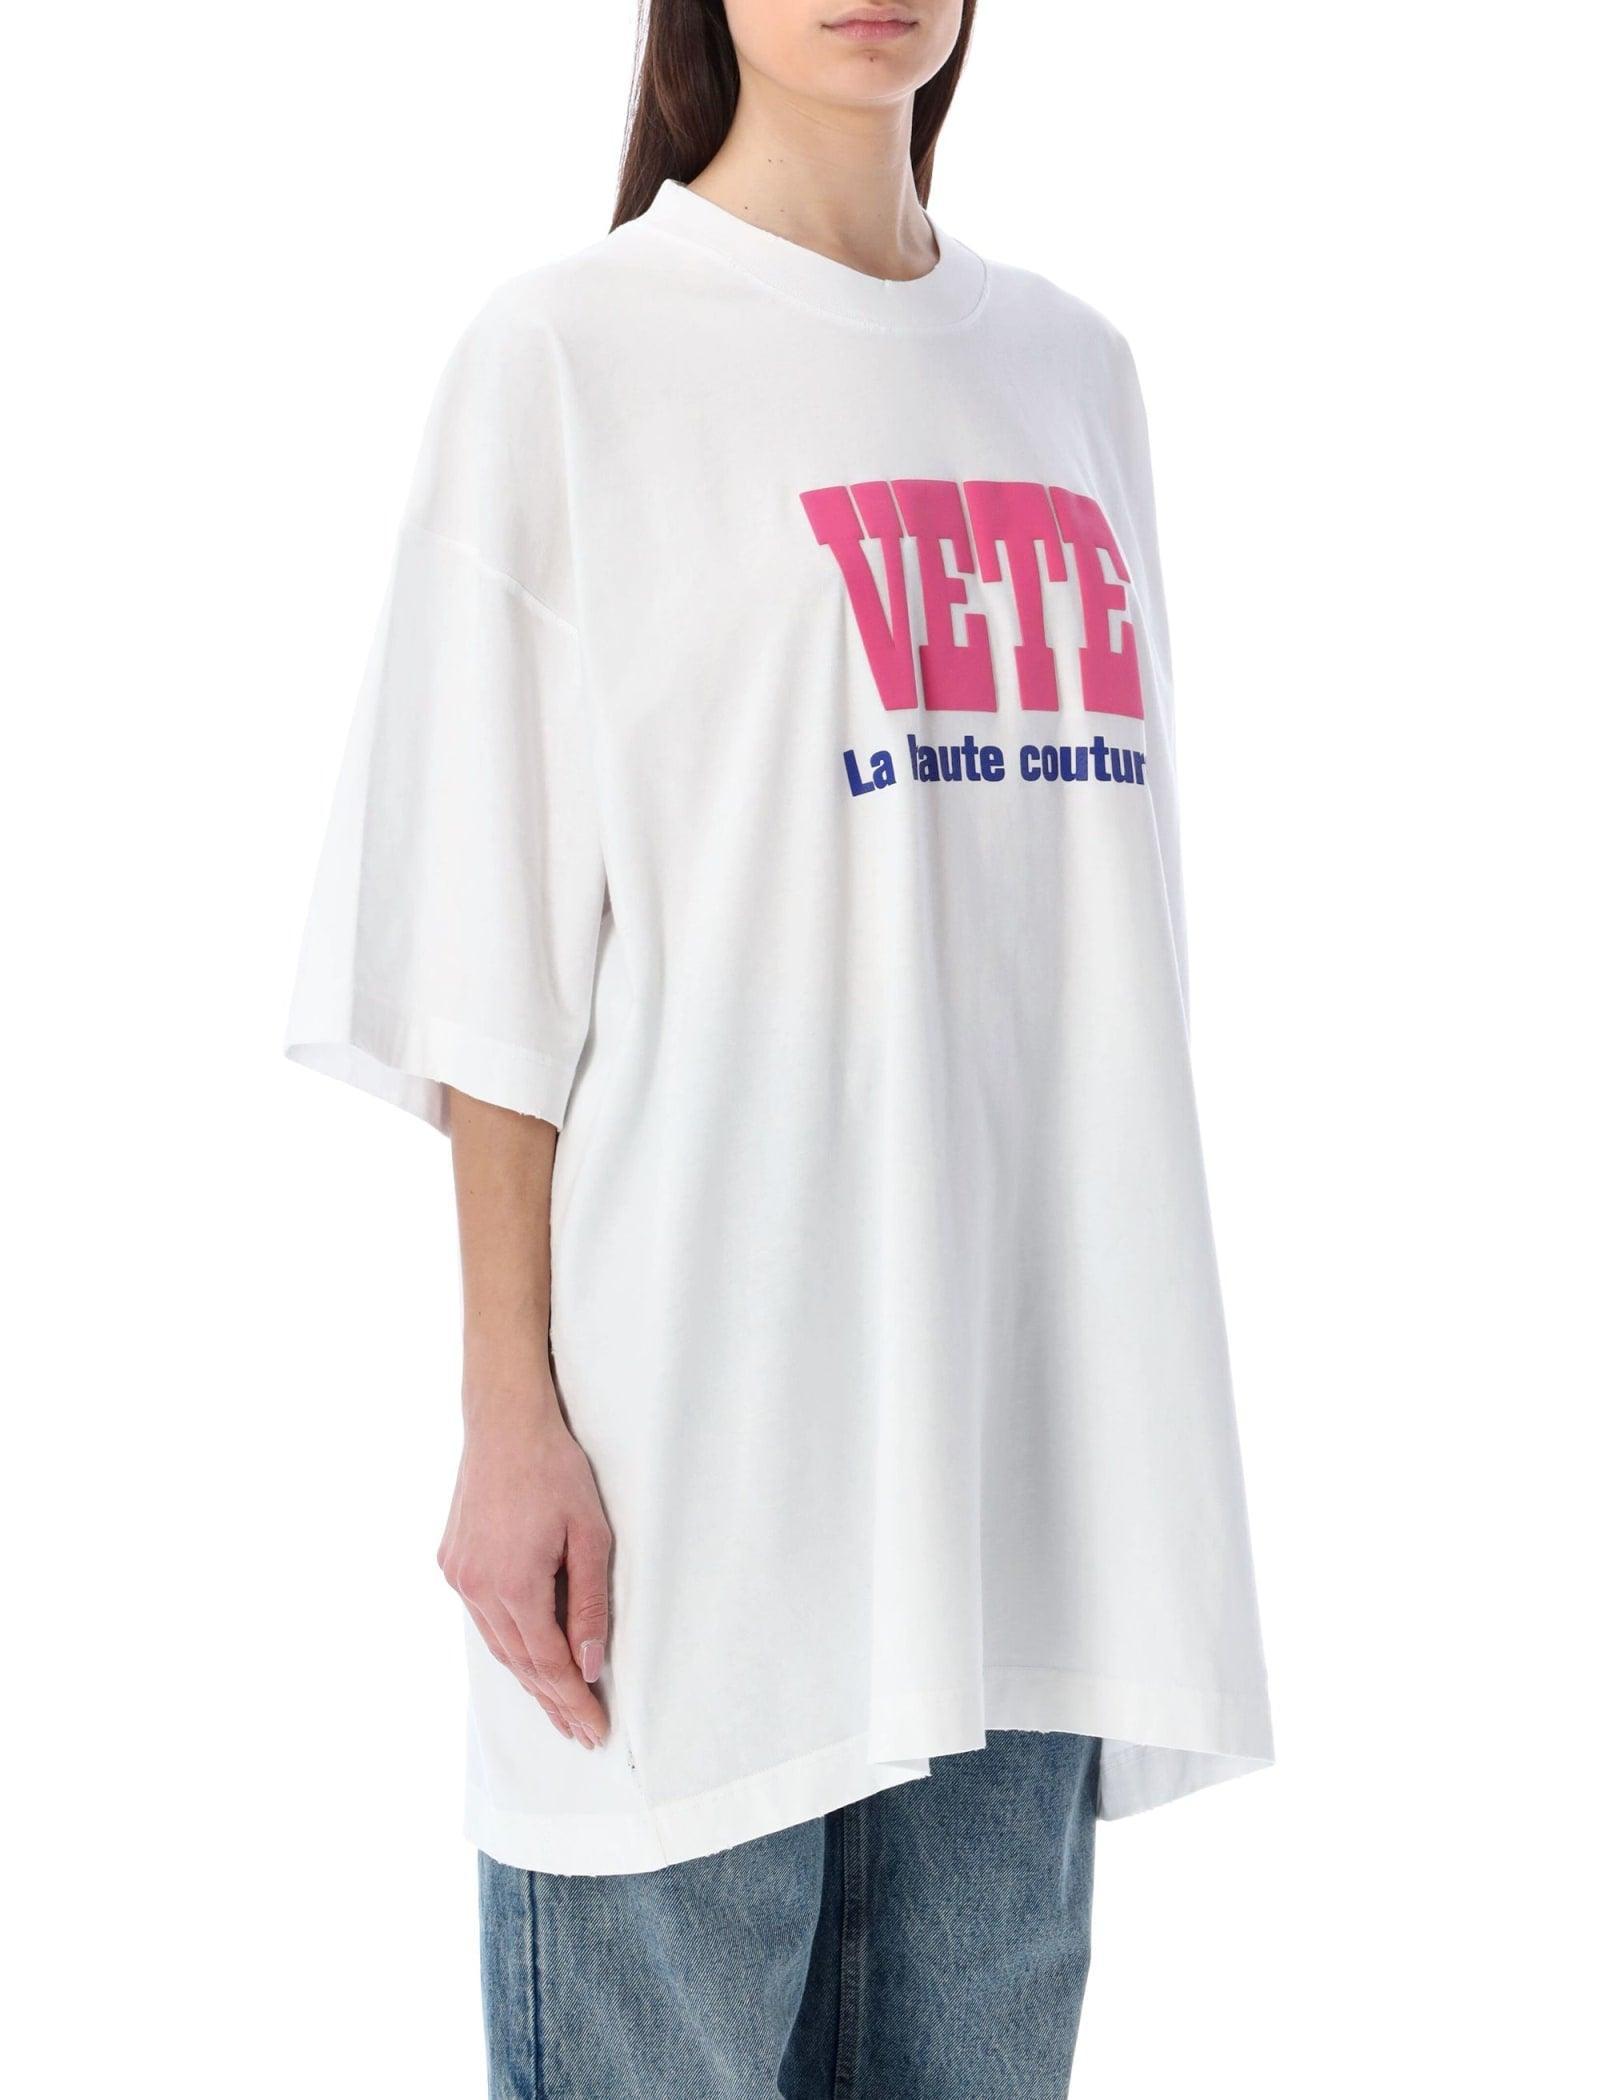 Vetements La Haute Couture T-shirt in White | Lyst